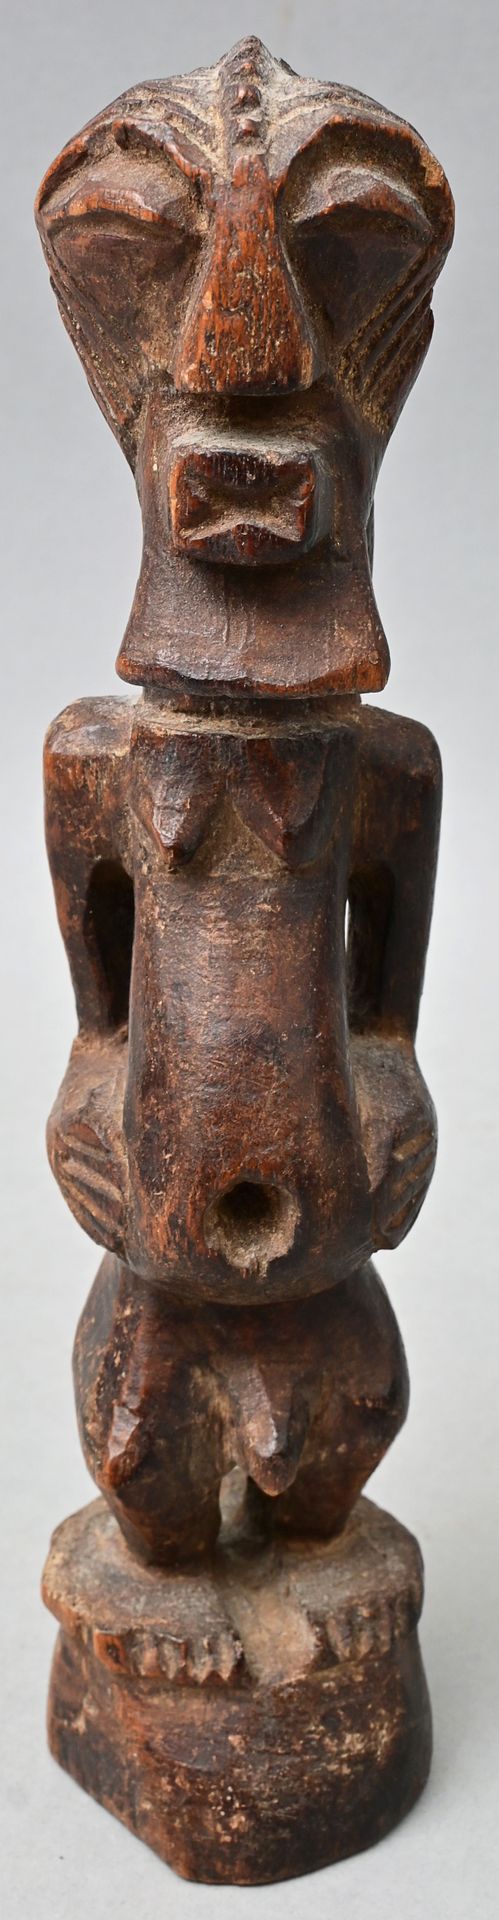 Null Statuette/ magic figure, D. R. Congo, Songye style Male figure standing wit&hellip;